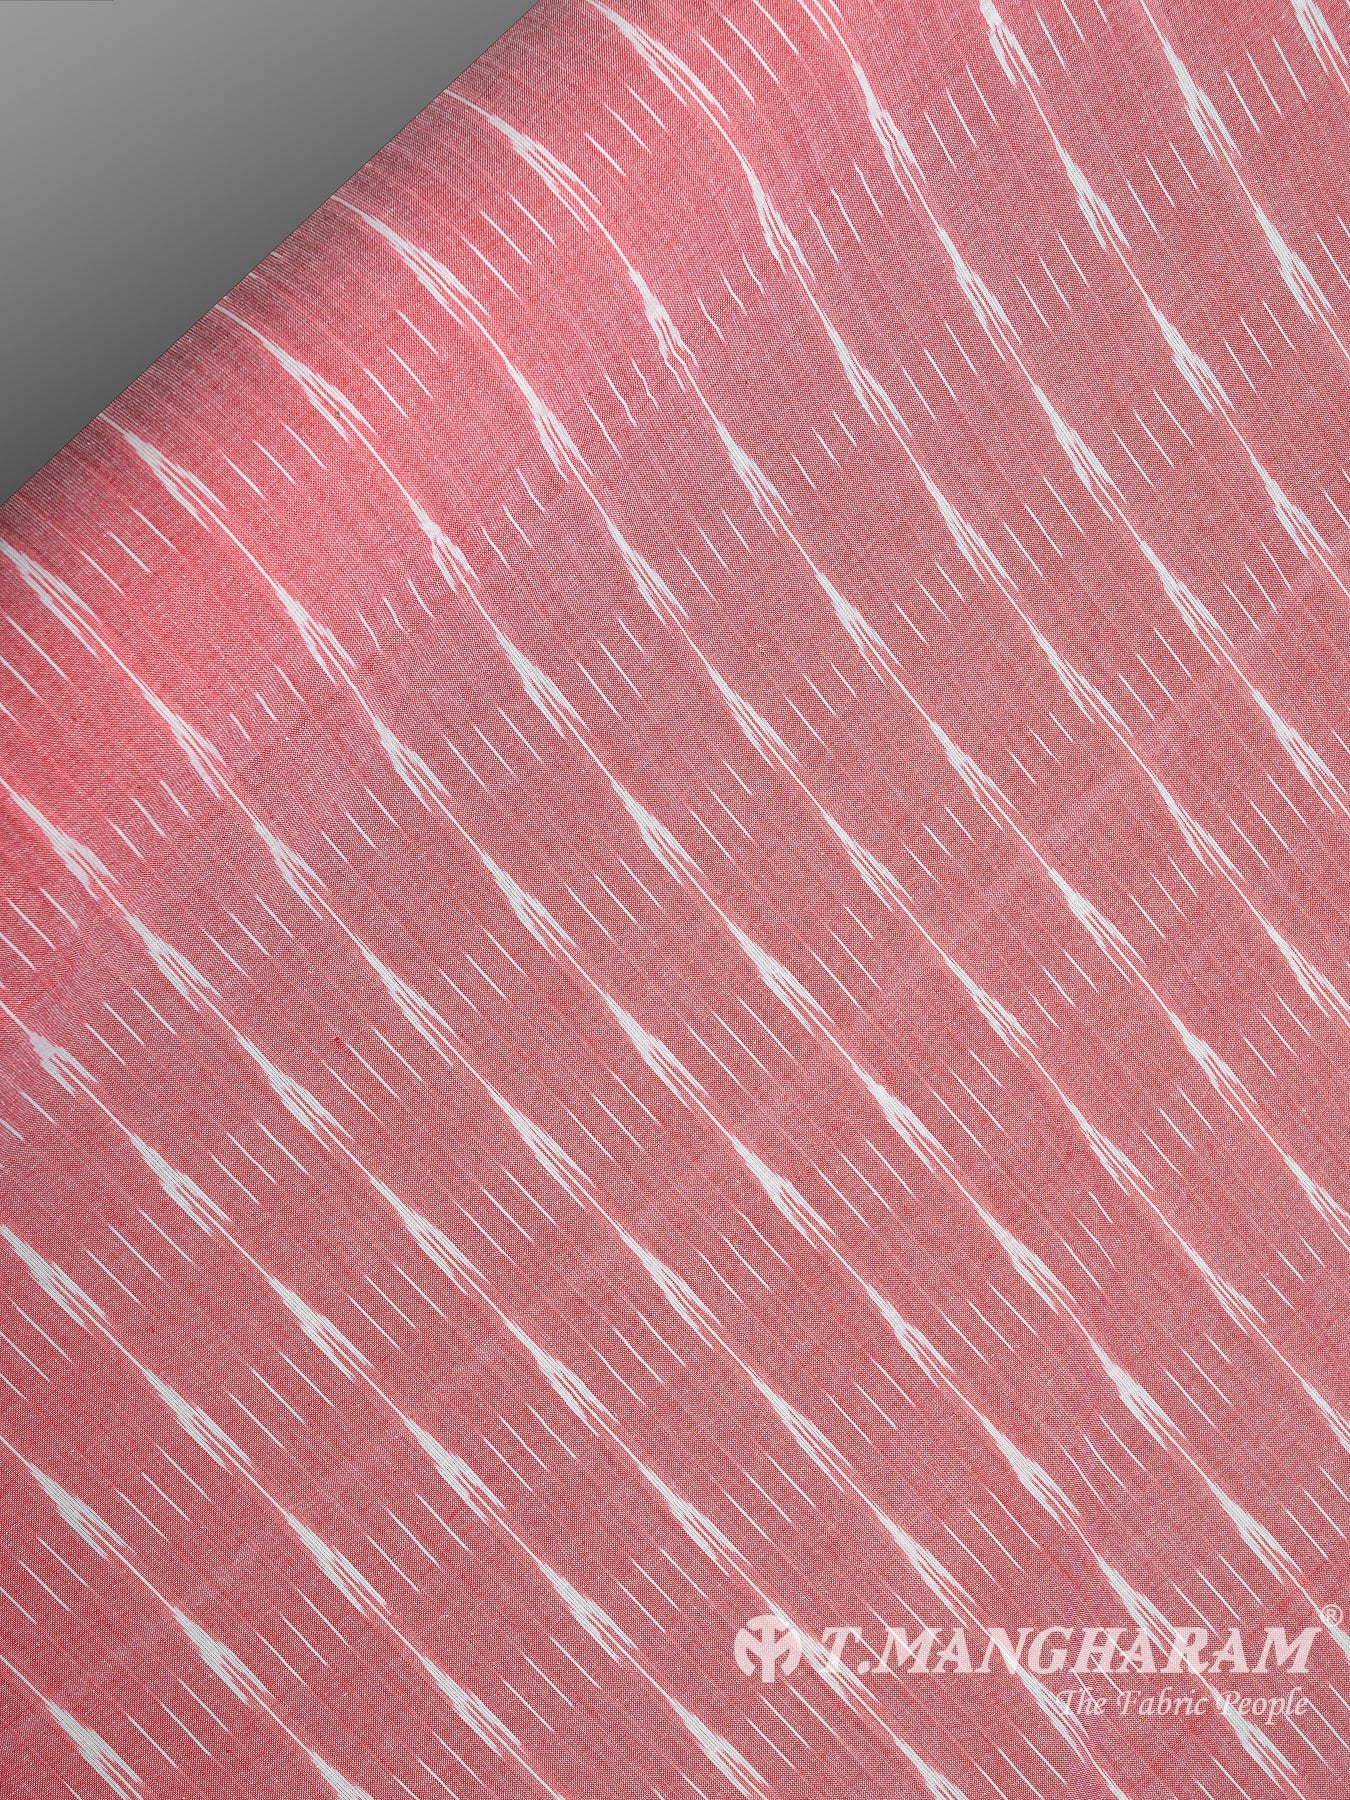 Pink Cotton Ikat Print Fabric - EB5838 view-2